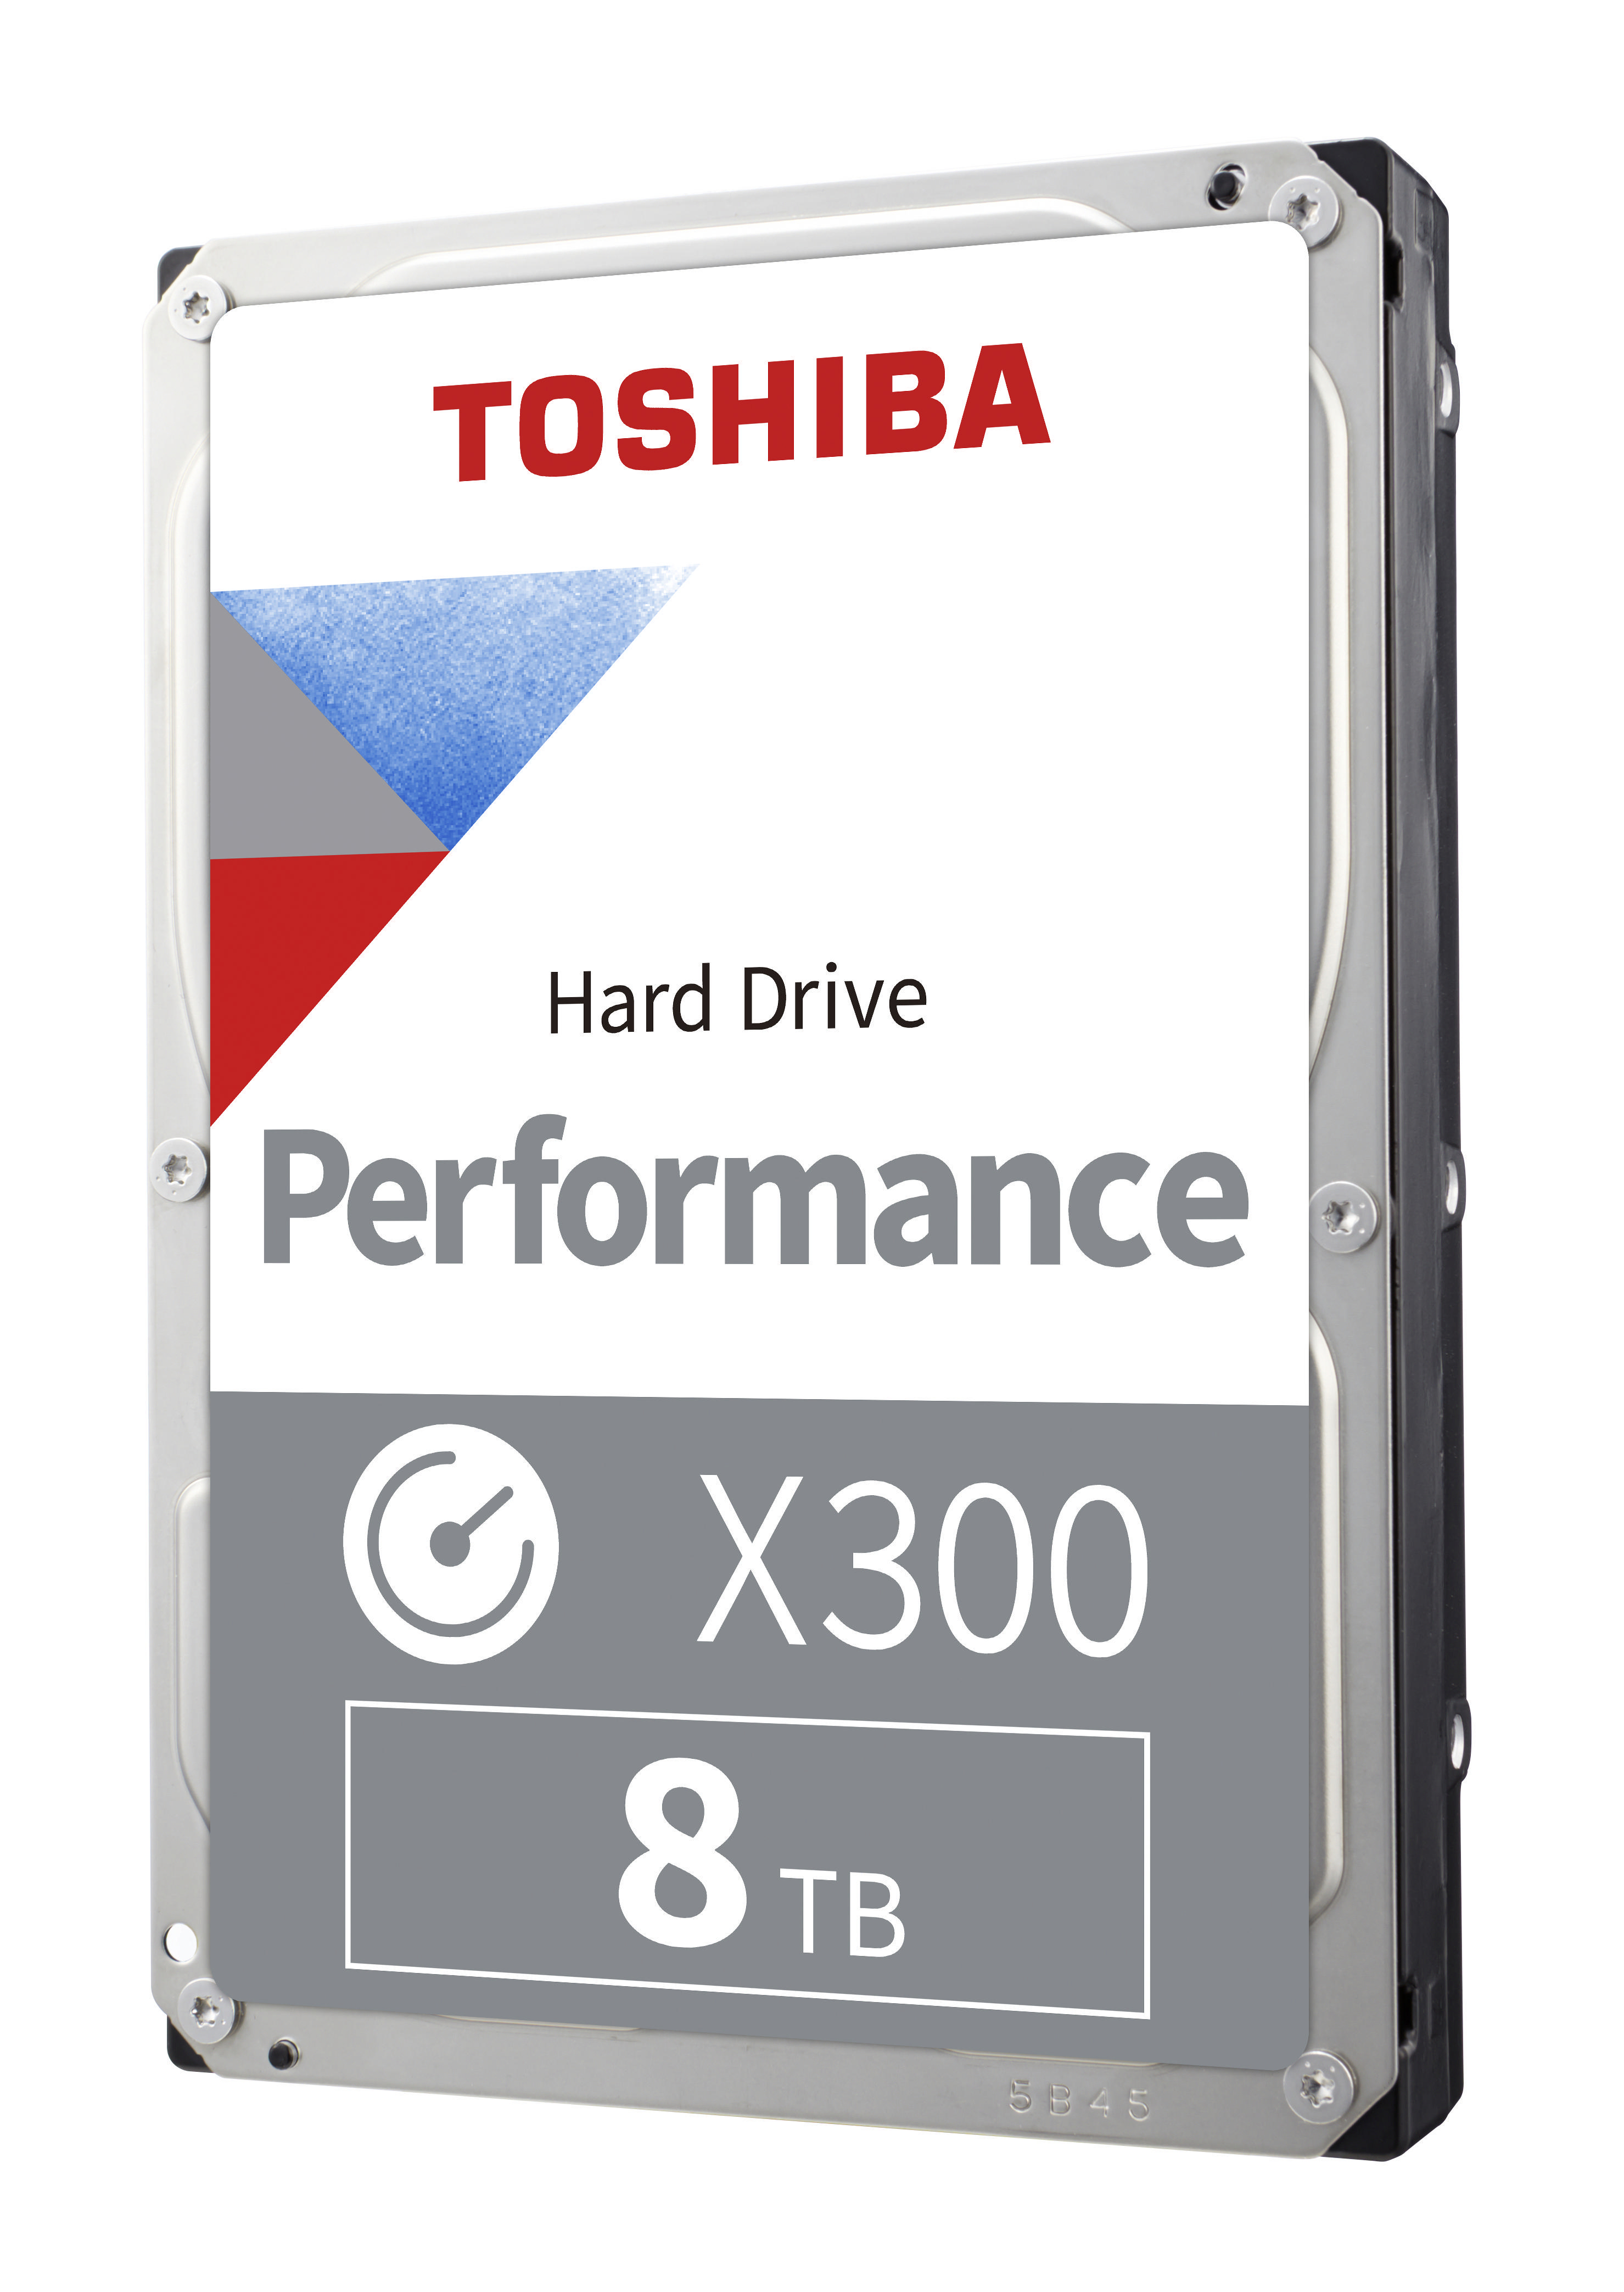 TOSHIBA High Interner Performance HDD 6 intern 8 Festplatte, SATA Zoll, Gbps, Speicher, 3,5 TB